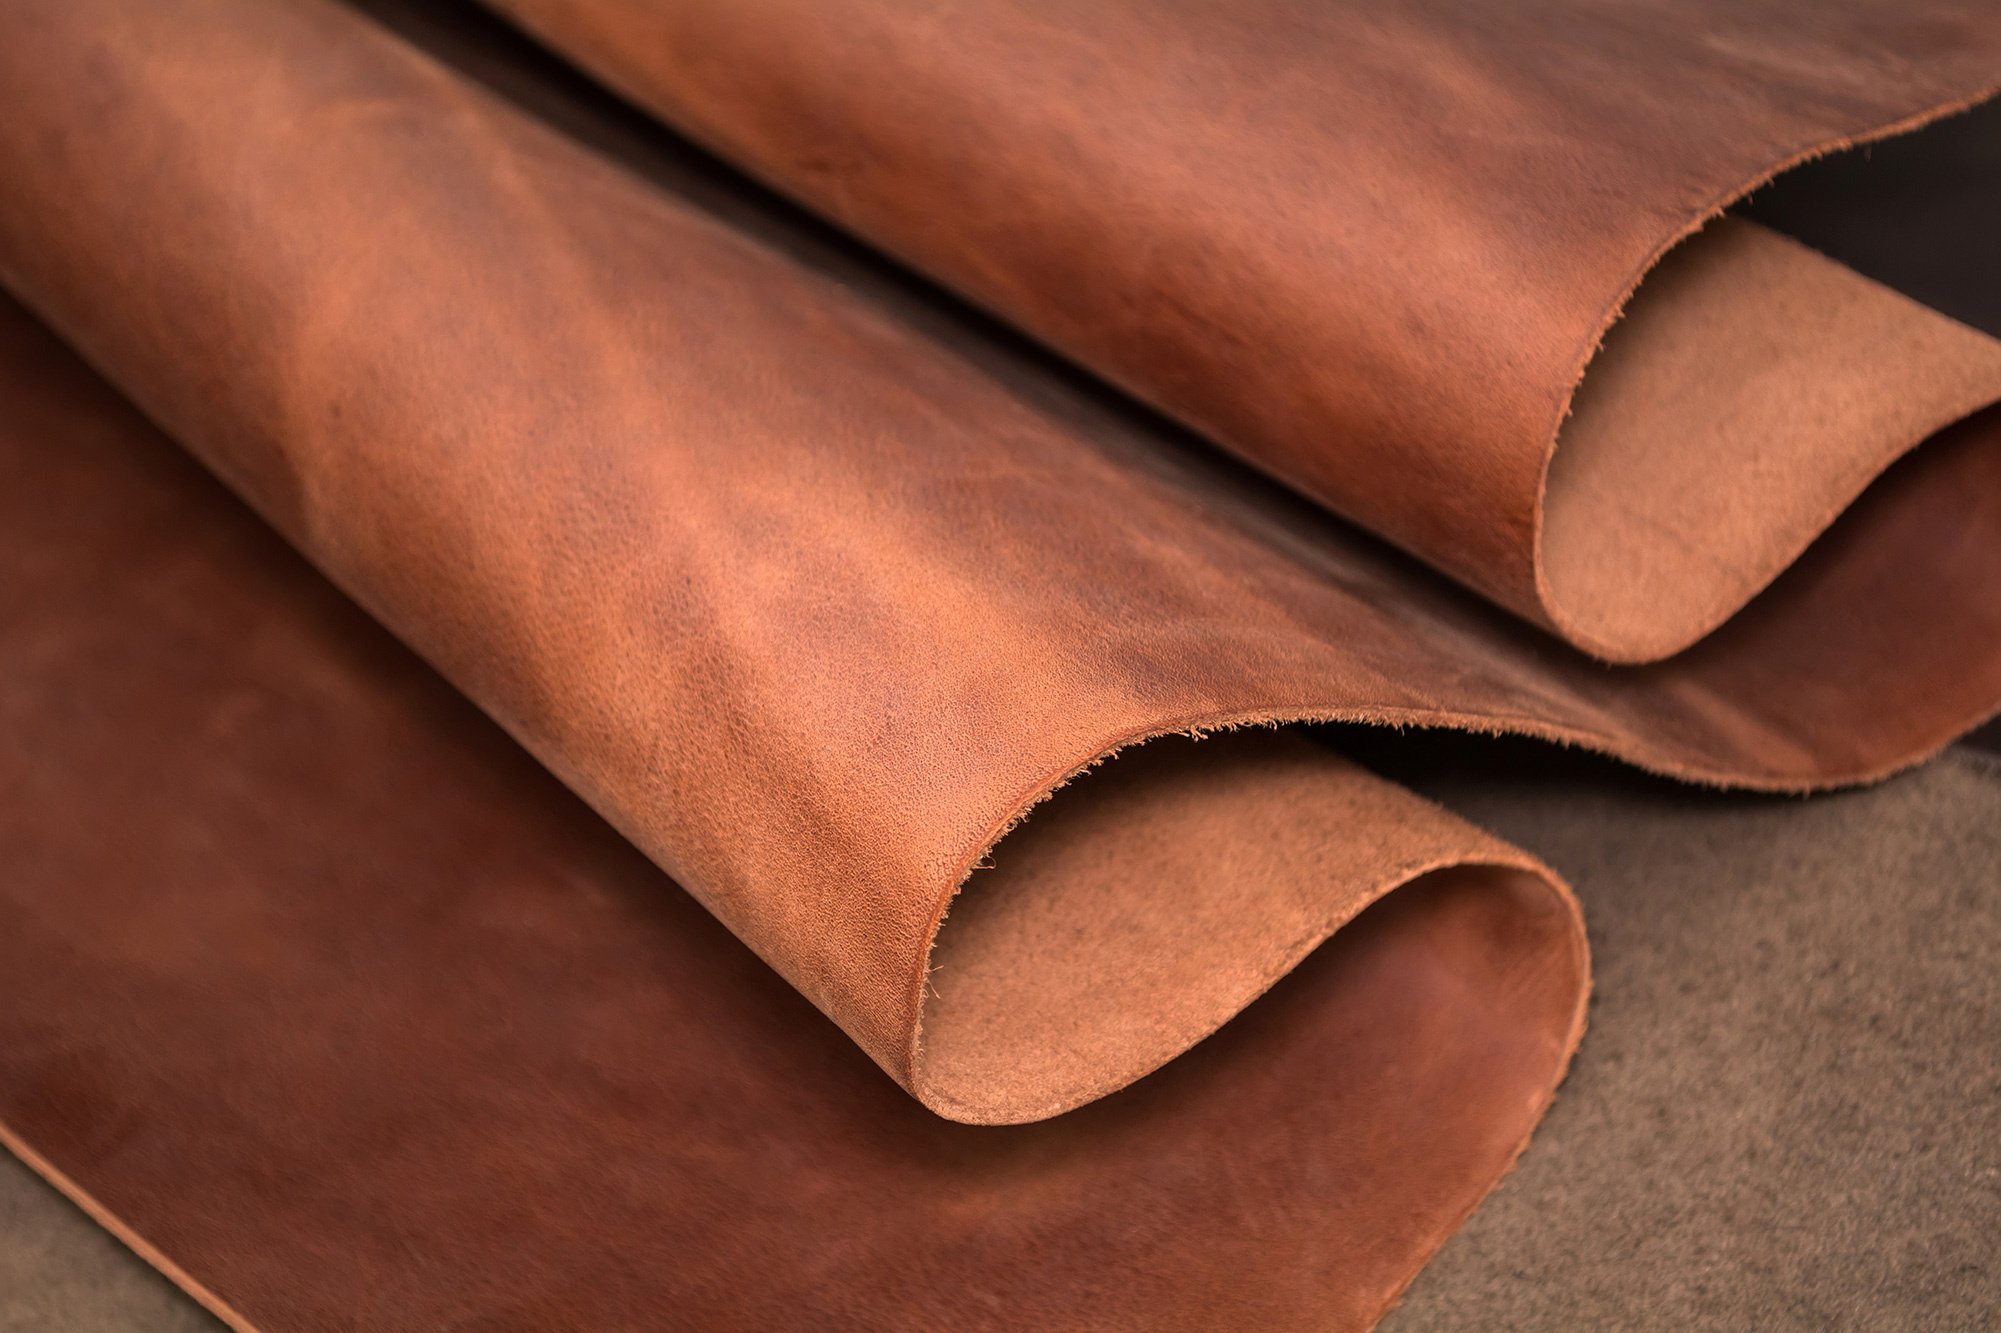 EU leather regulation, Cotance commission, Quality standards, Sustainable leather, 2010x1340 HD Desktop